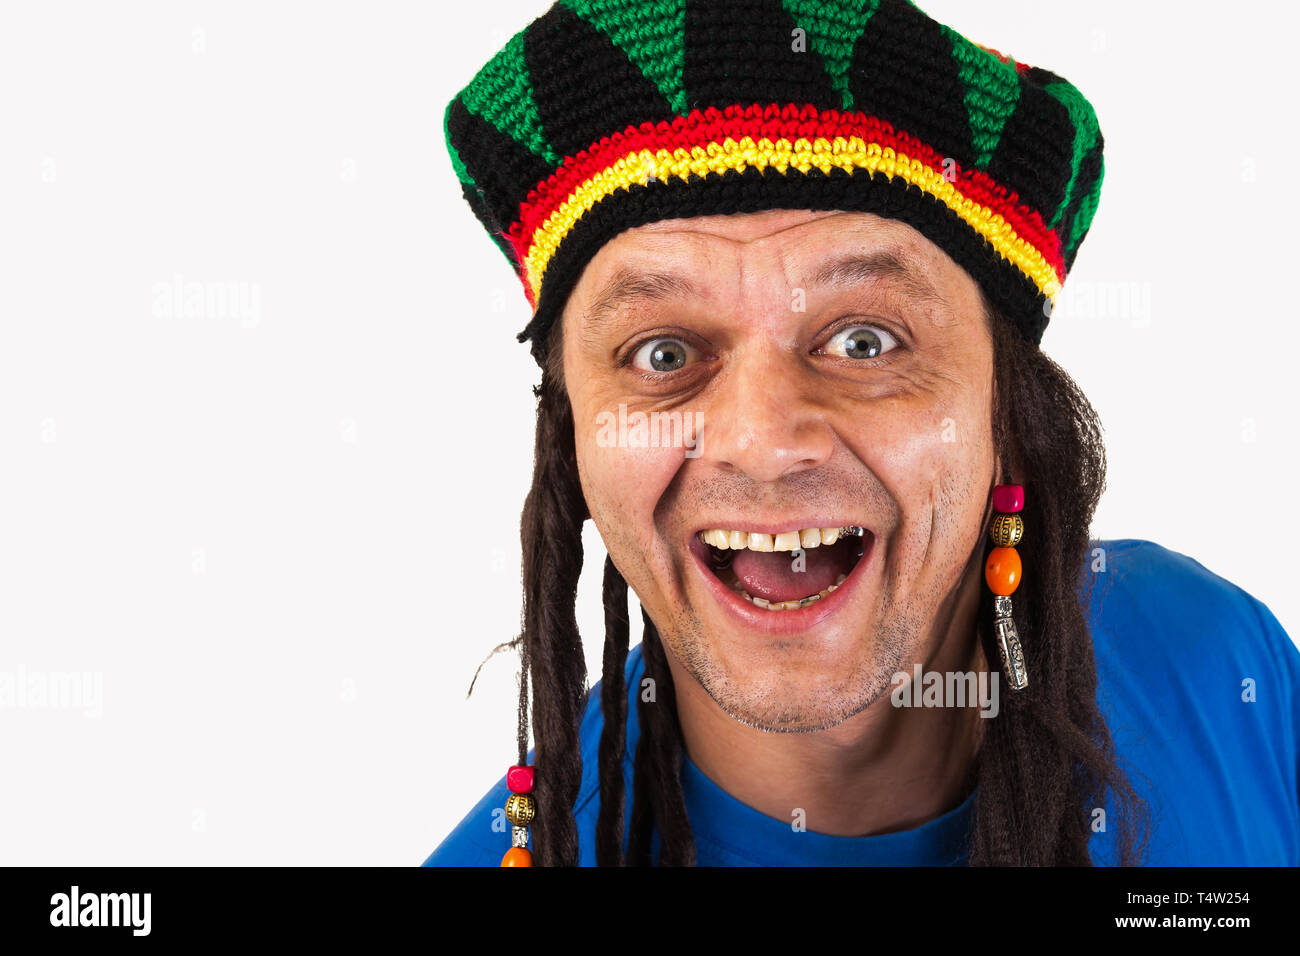 A crazy man with dreadlocks wig Stock Photo